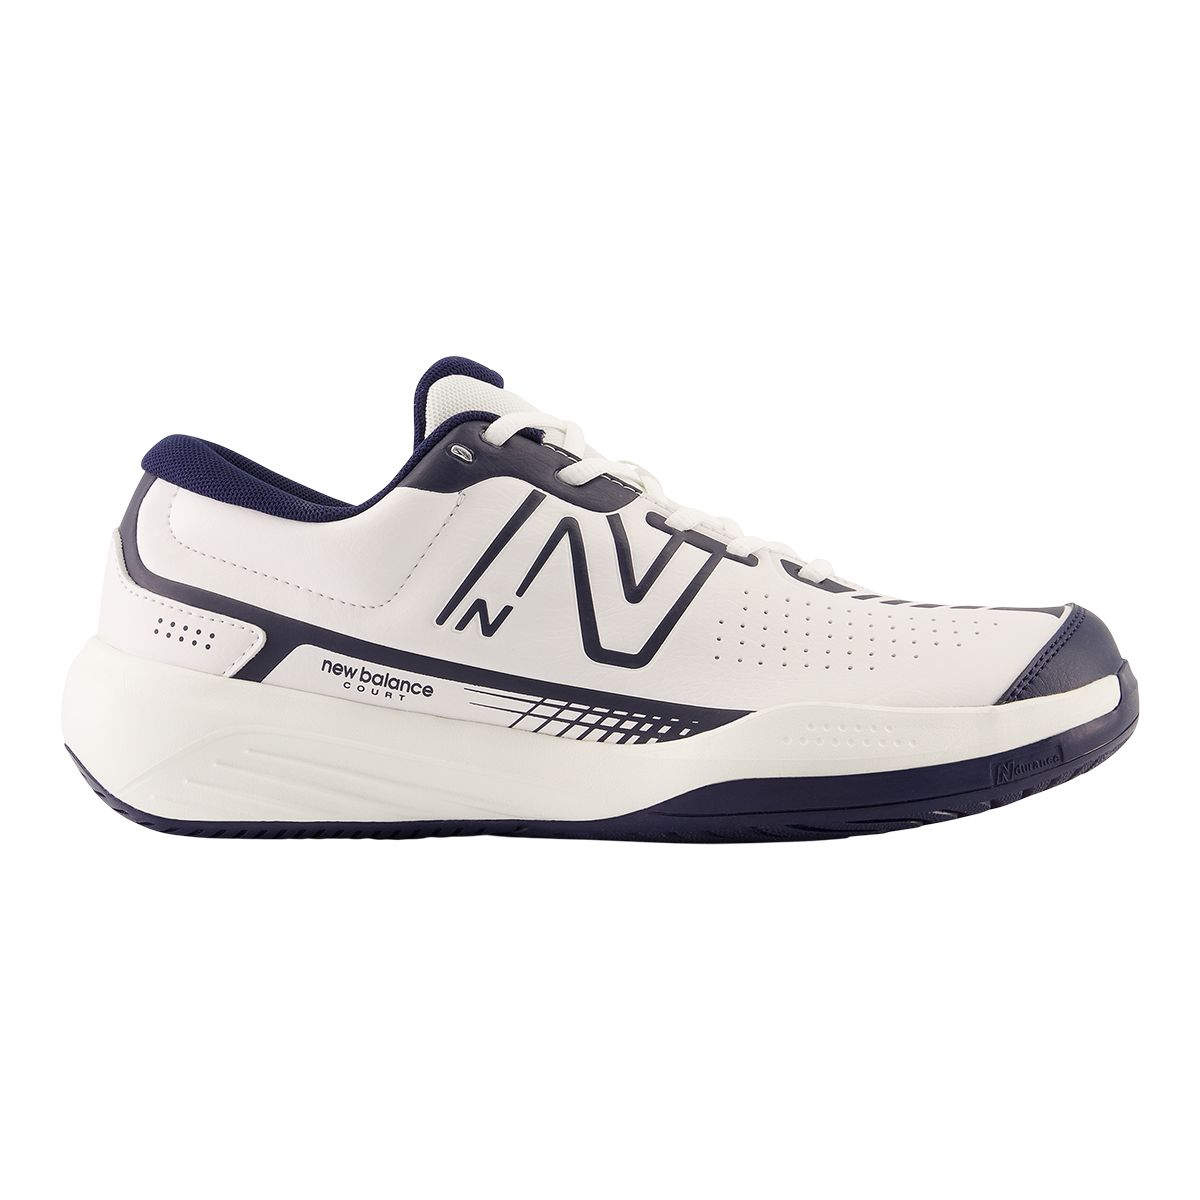 New Balance Men's 696V5 Tennis Shoes